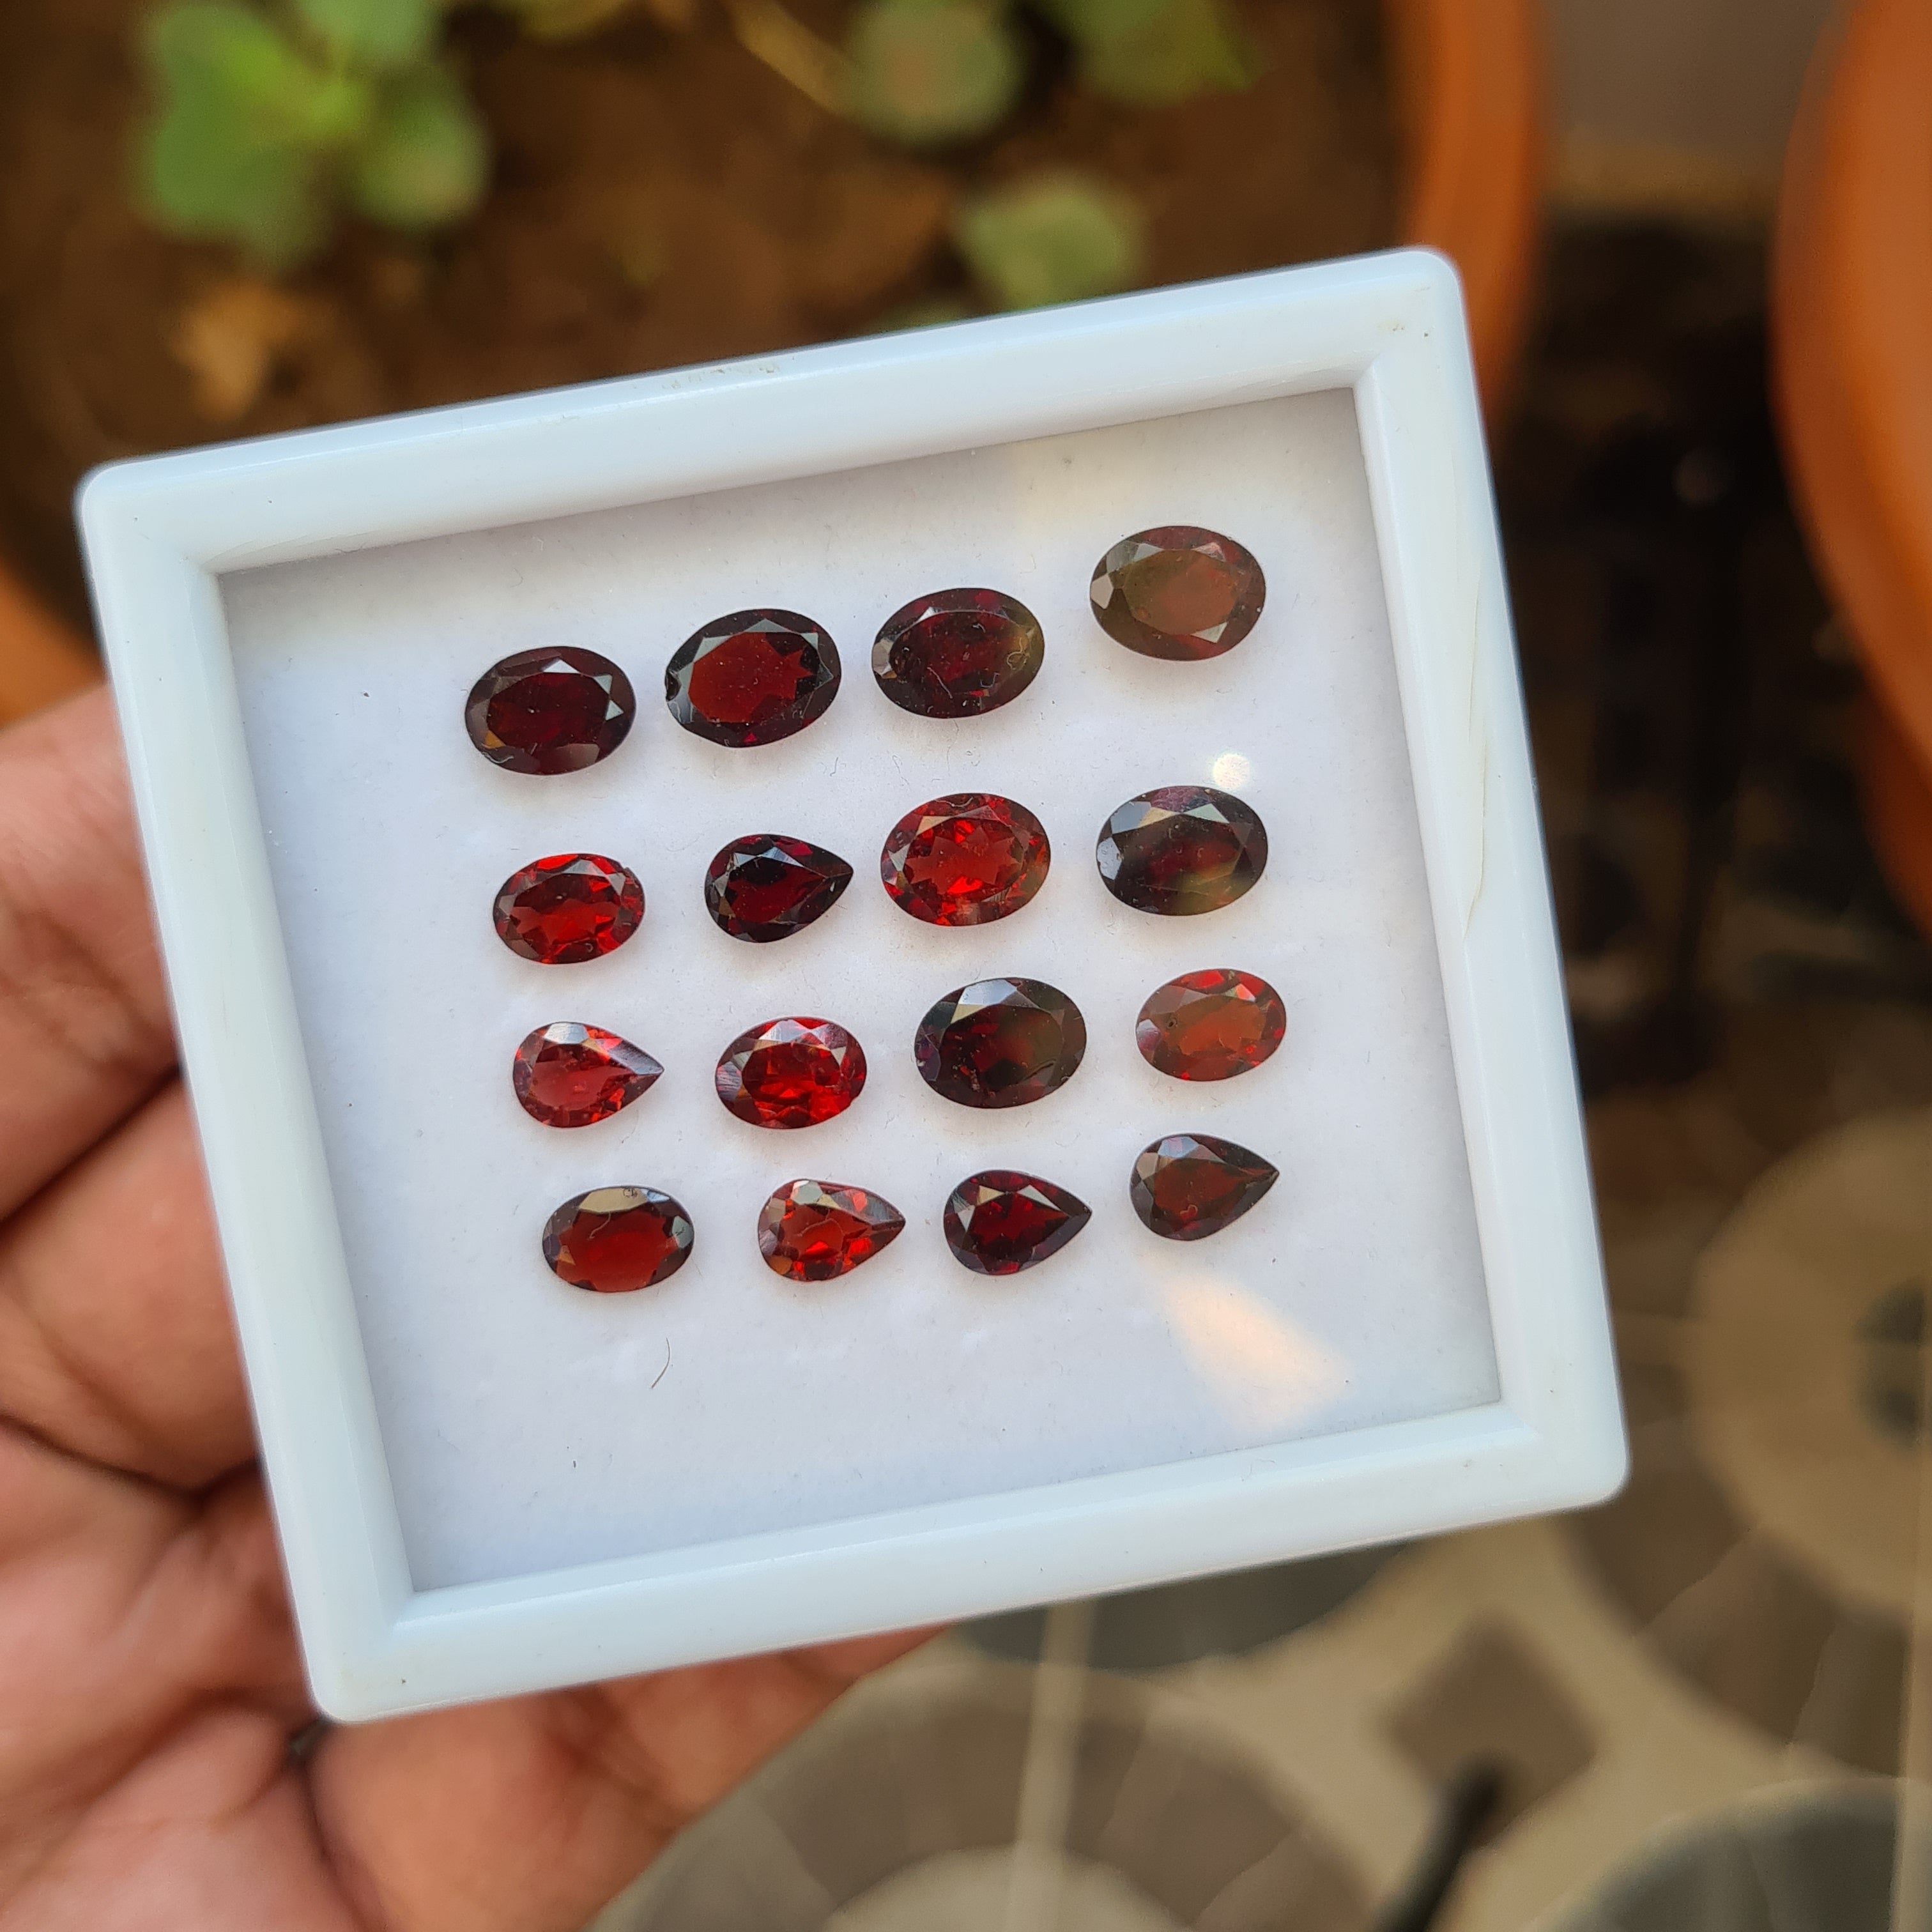 16 Pcs Natural Garnet Faceted Gemstones Mix Shape,7-8mm Gems Lot -Loose Gemstones - The LabradoriteKing